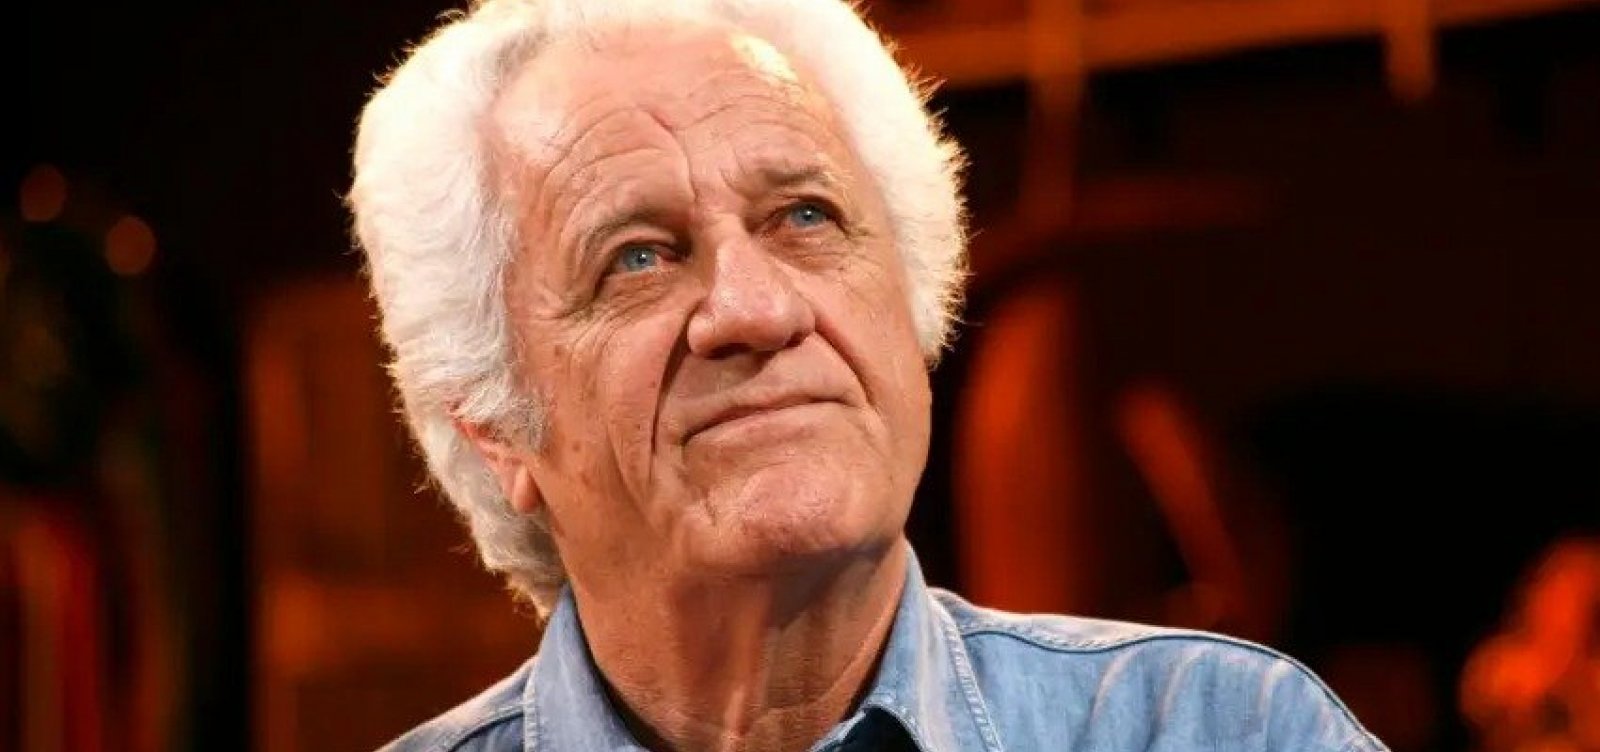 Morre Rolando Boldrin, multi-artista e apresentador da TV Cultura, aos 86 anos